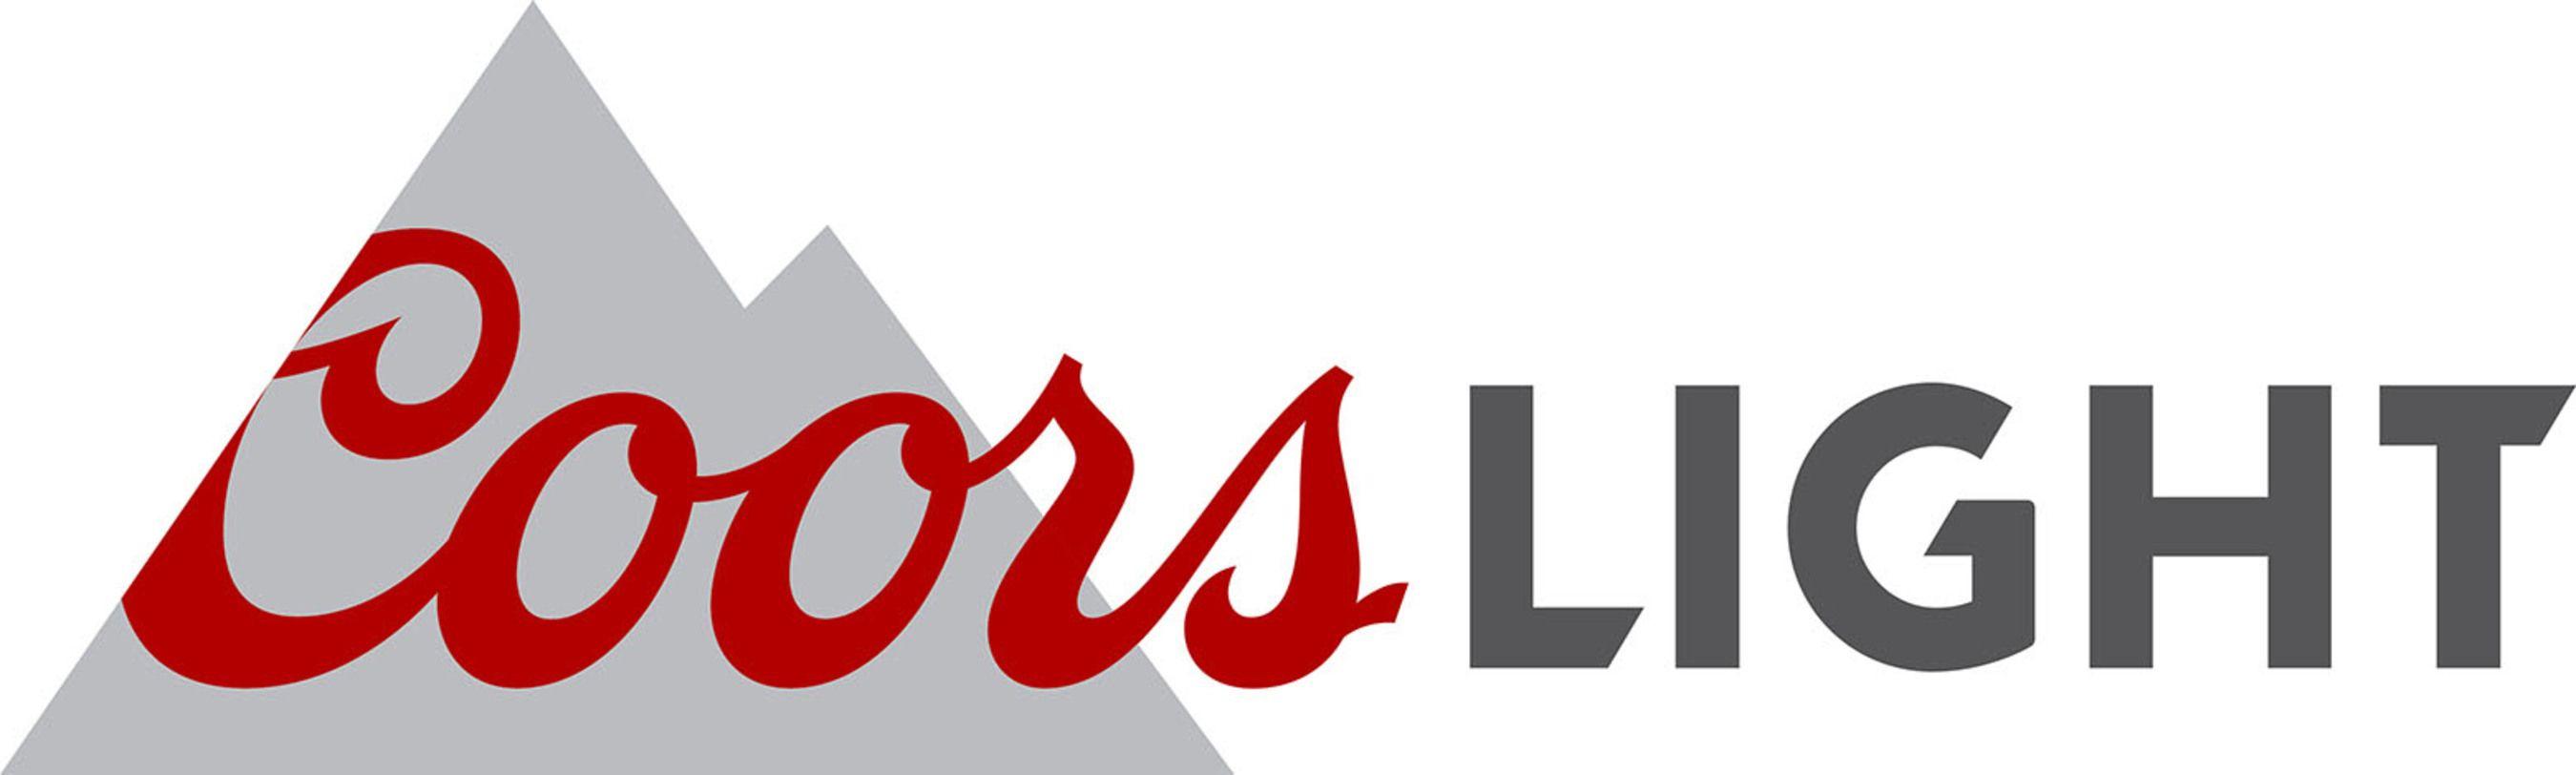 Coors Light Football Logo - Coors Light Buffalo Football House Party Returns in 2015